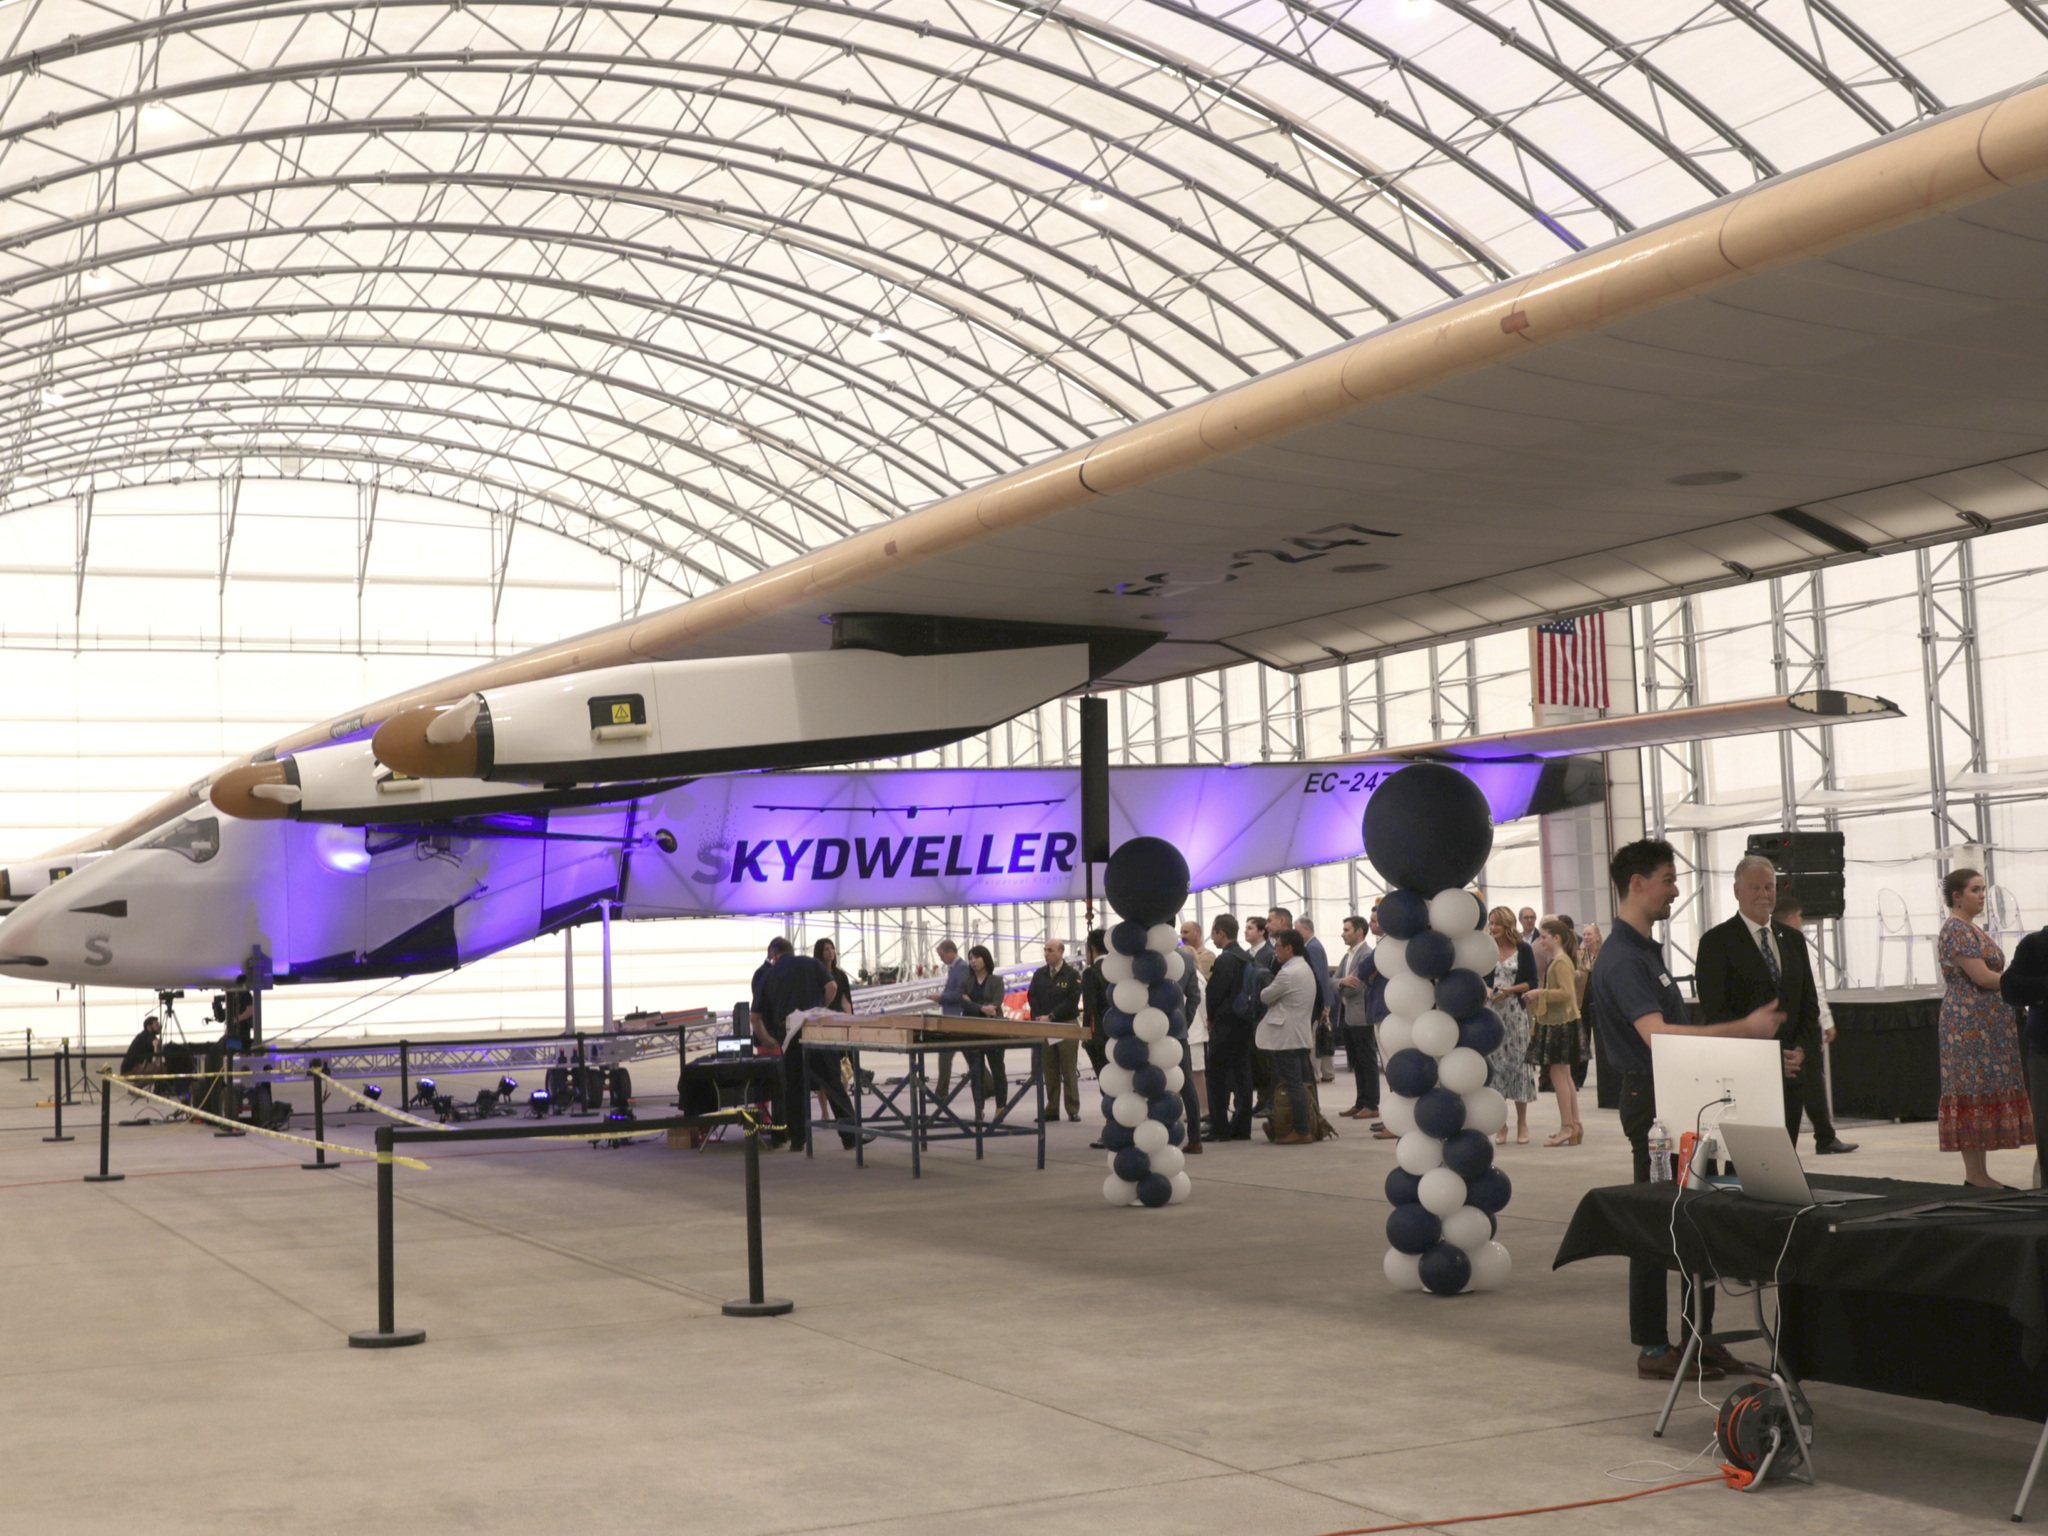 Skydweller autonomous solar-powered aircraft completes first flight